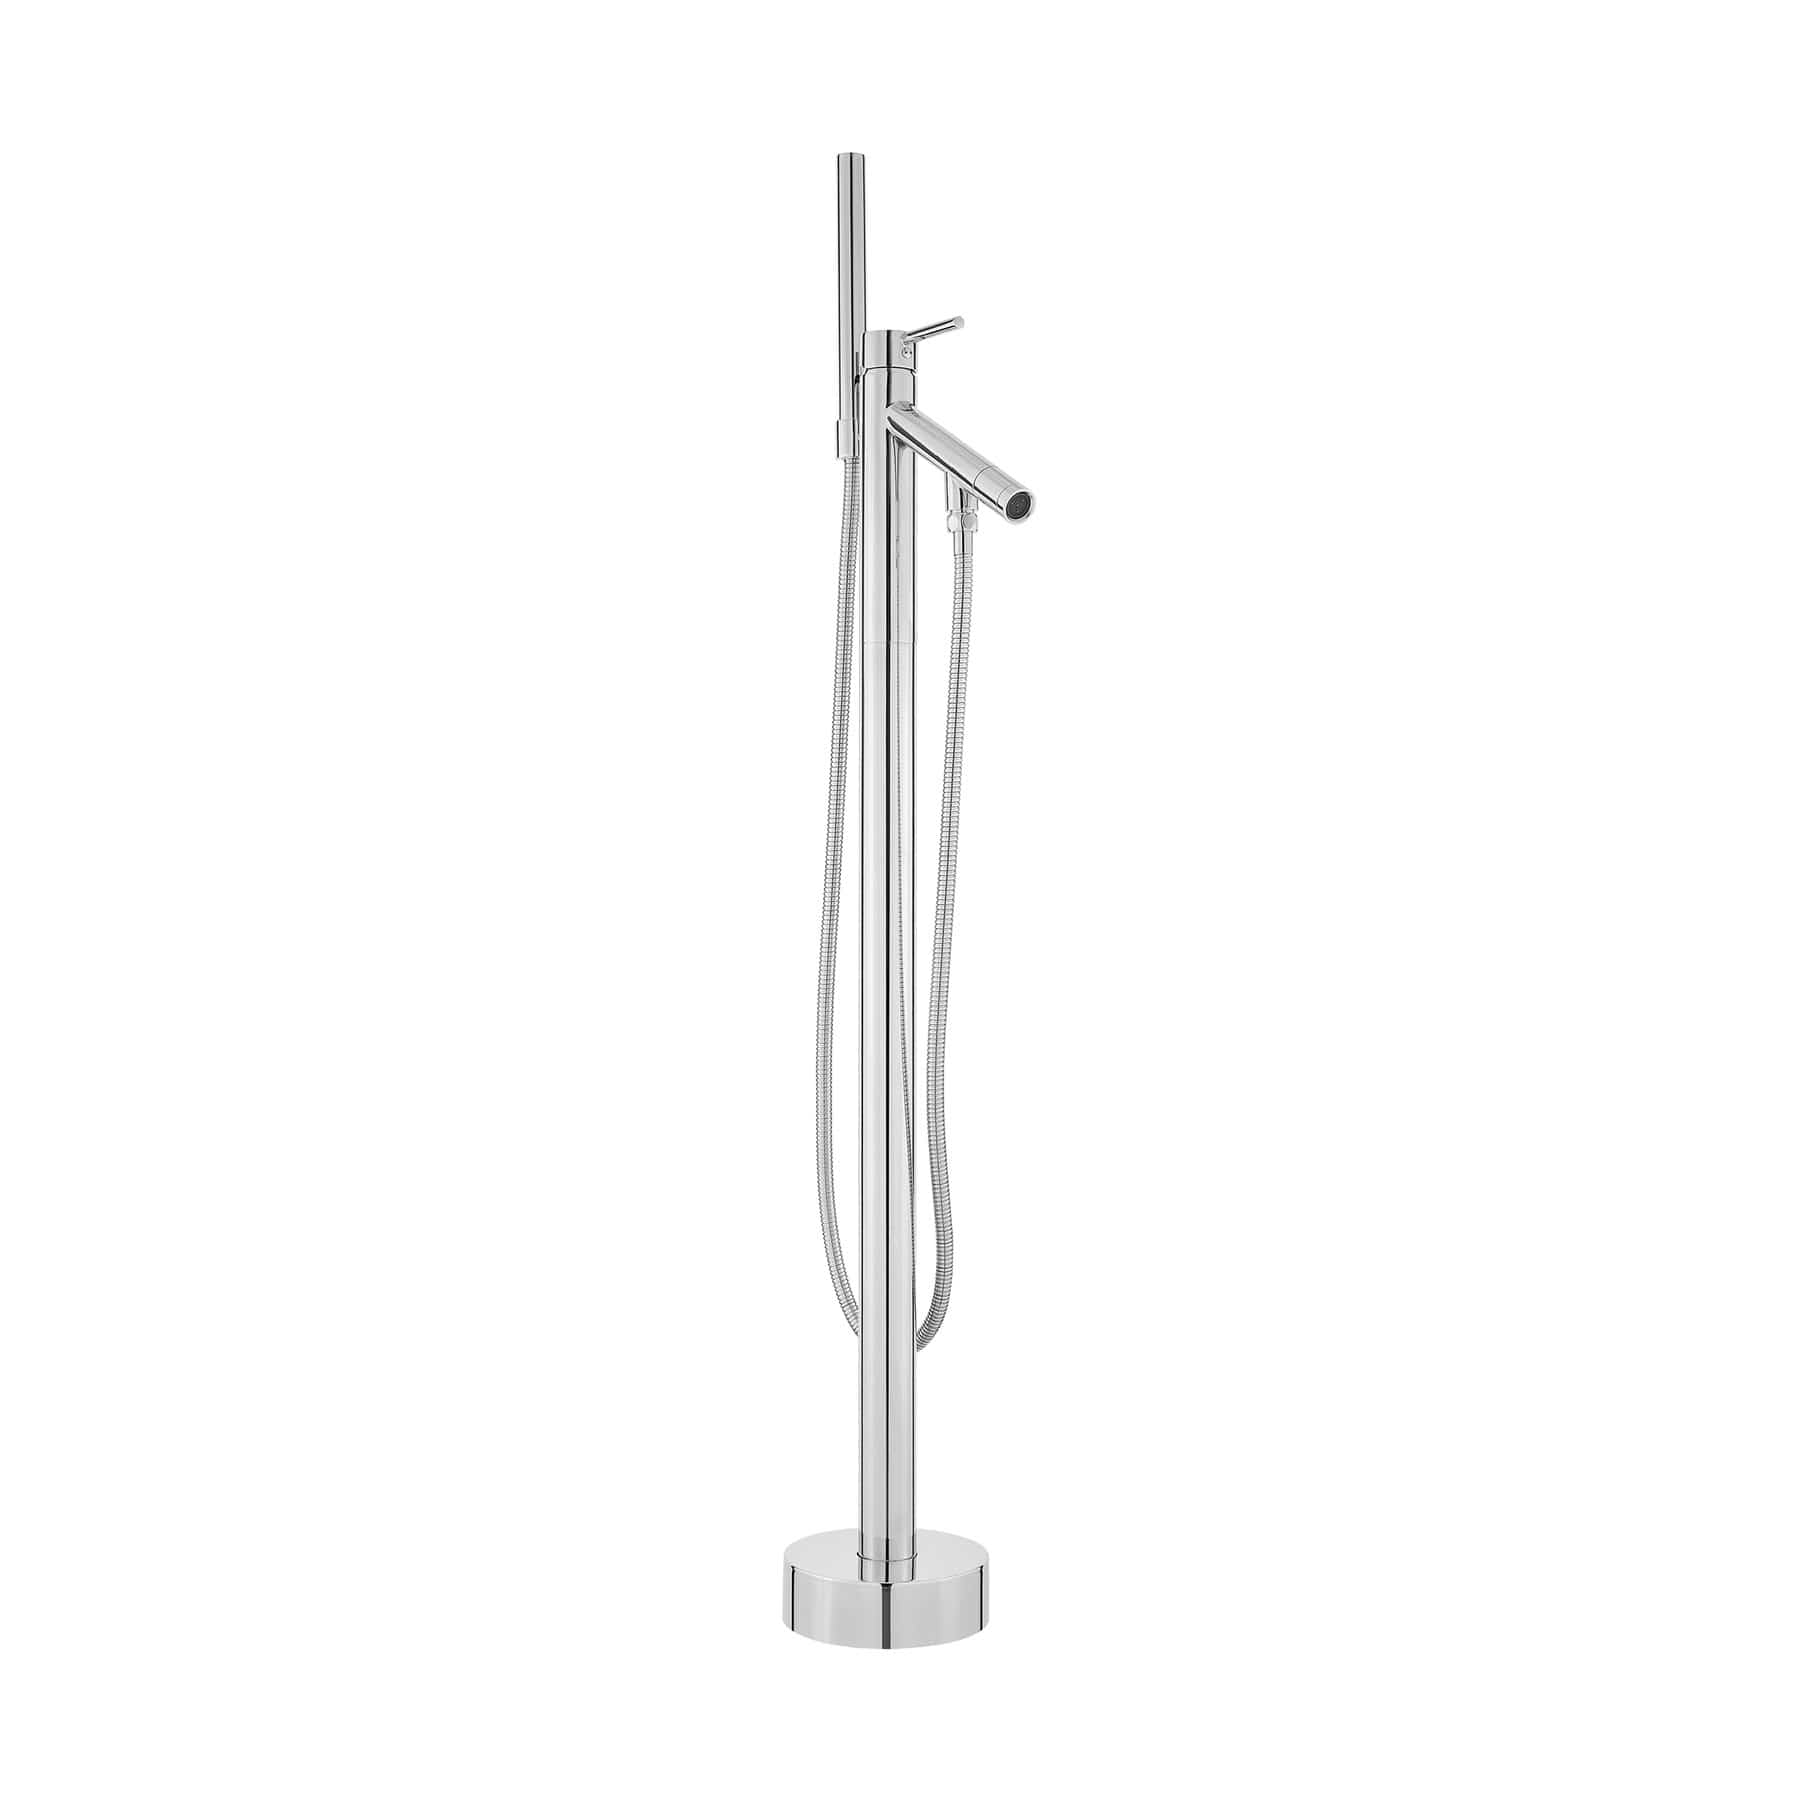 Swiss Madison Plaisir Freestanding Bathtub Faucet in Chrome - SM-FF10C - Molaix723552143758AccessoriesSM-FF10C